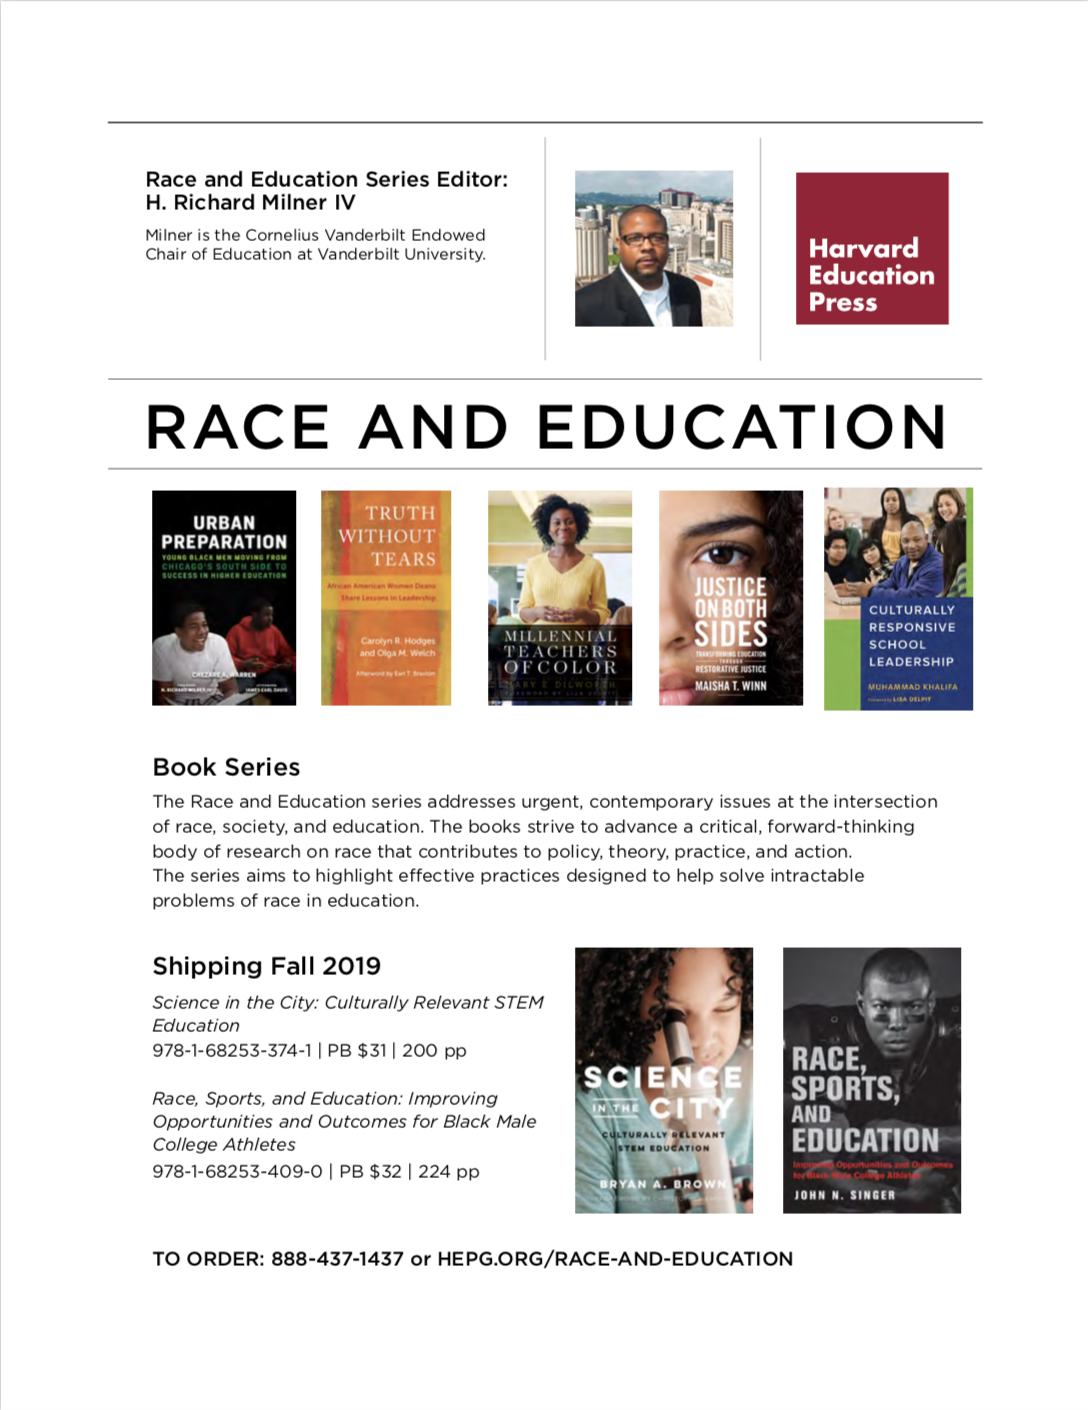 Harvard Ed Press: Race and Education Flier